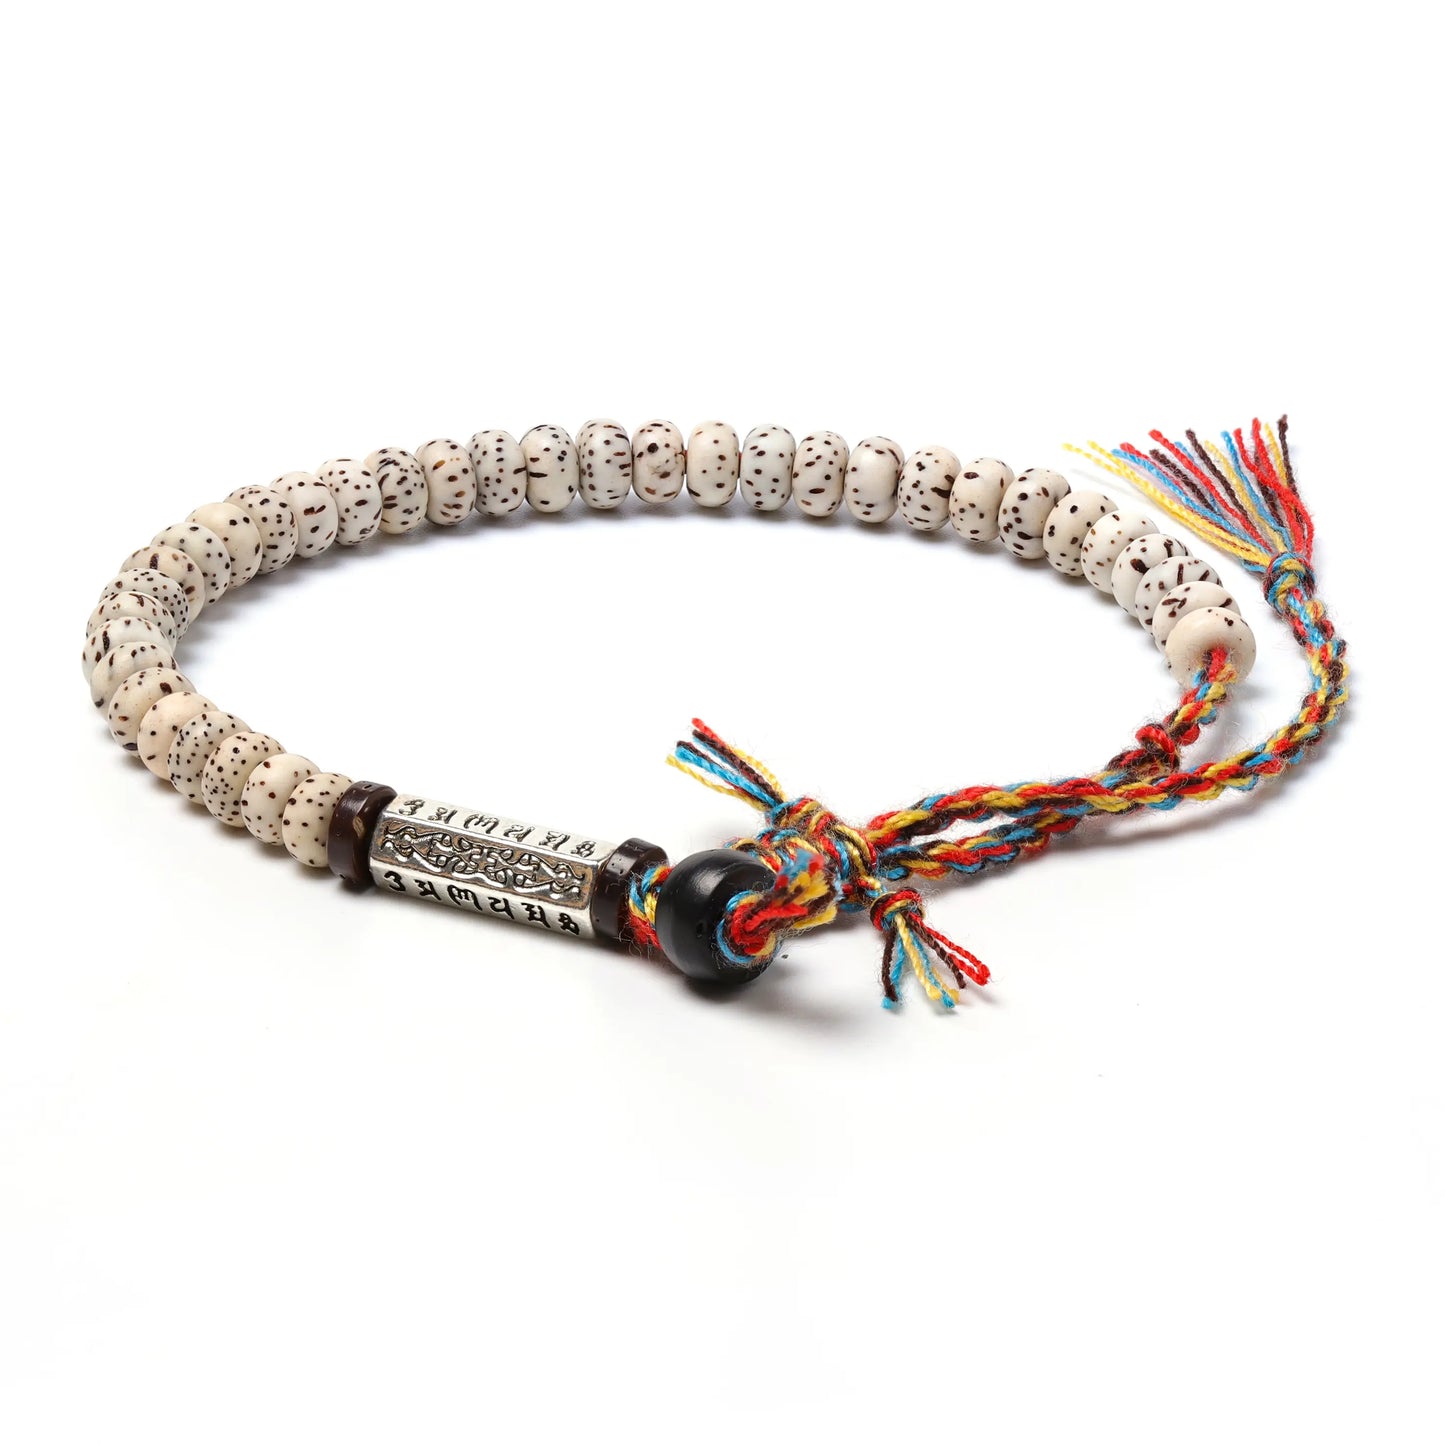 Handmade Tibetan Buddhist bracelet with hand carved bodhi seeds, super thin style